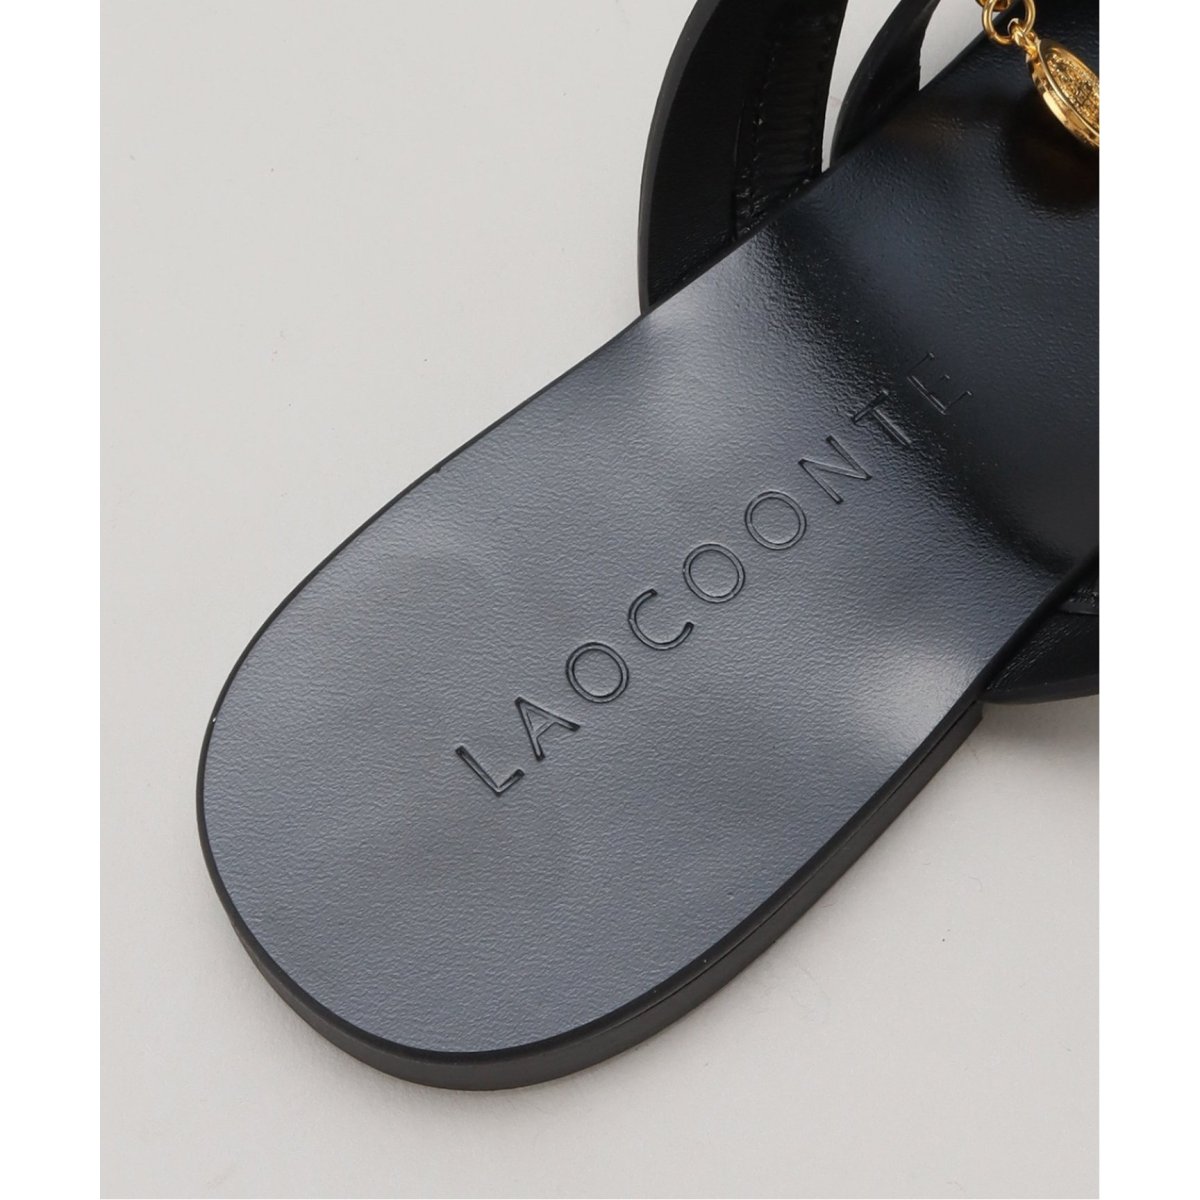 LAOCOONTE(ラオコンテ)】SALI Coins Sandal | ユー バイ スピック